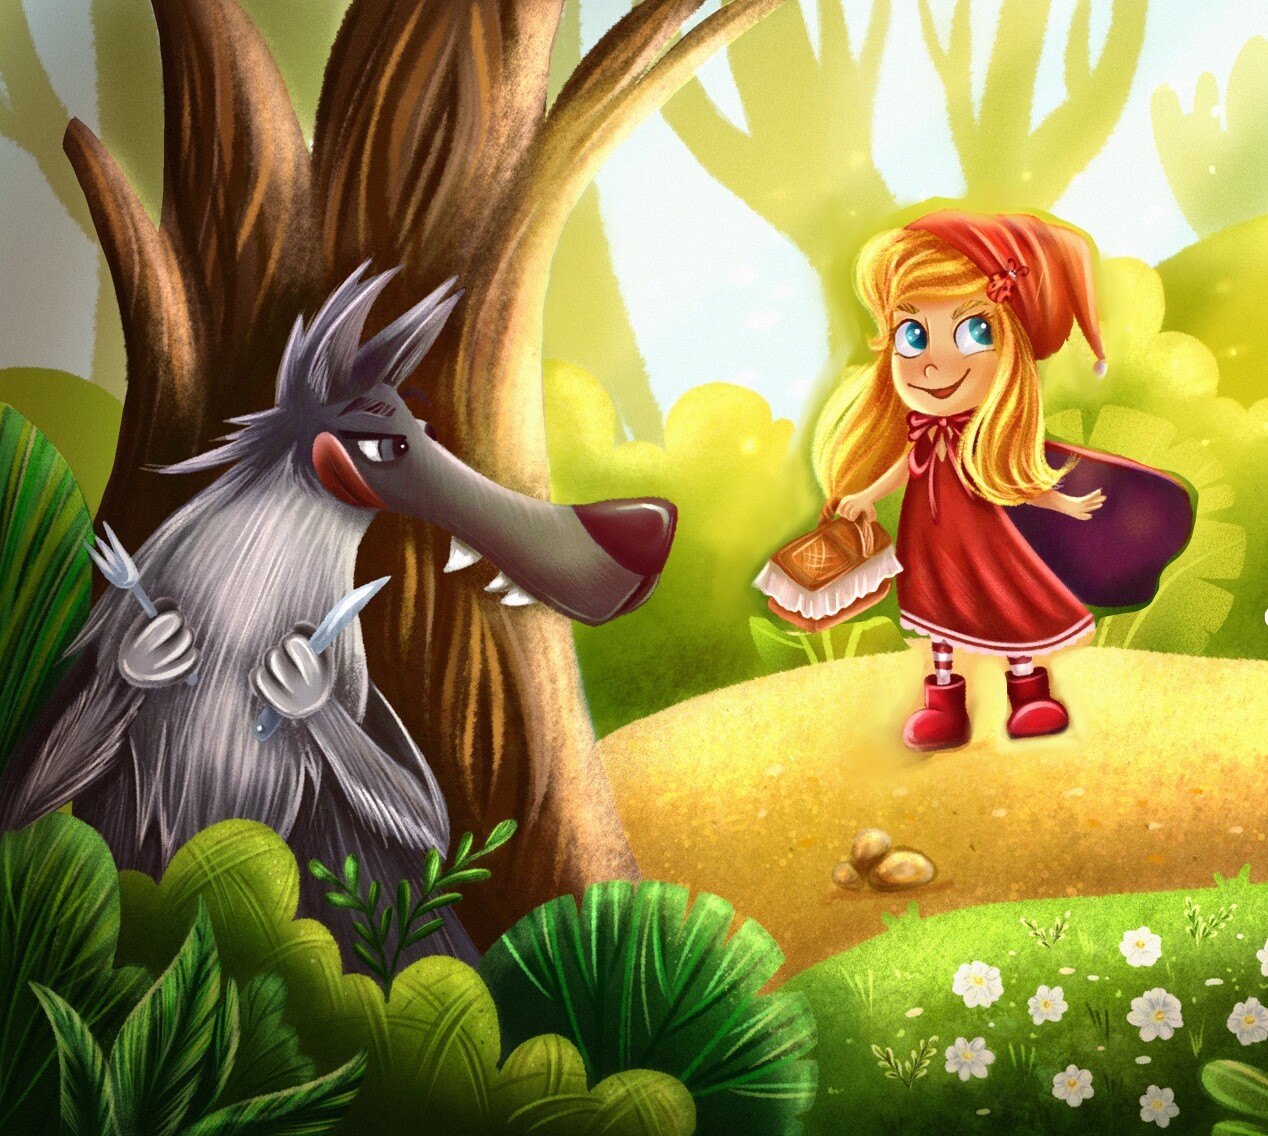 ArtStation - Little Red Riding Hood book illustration